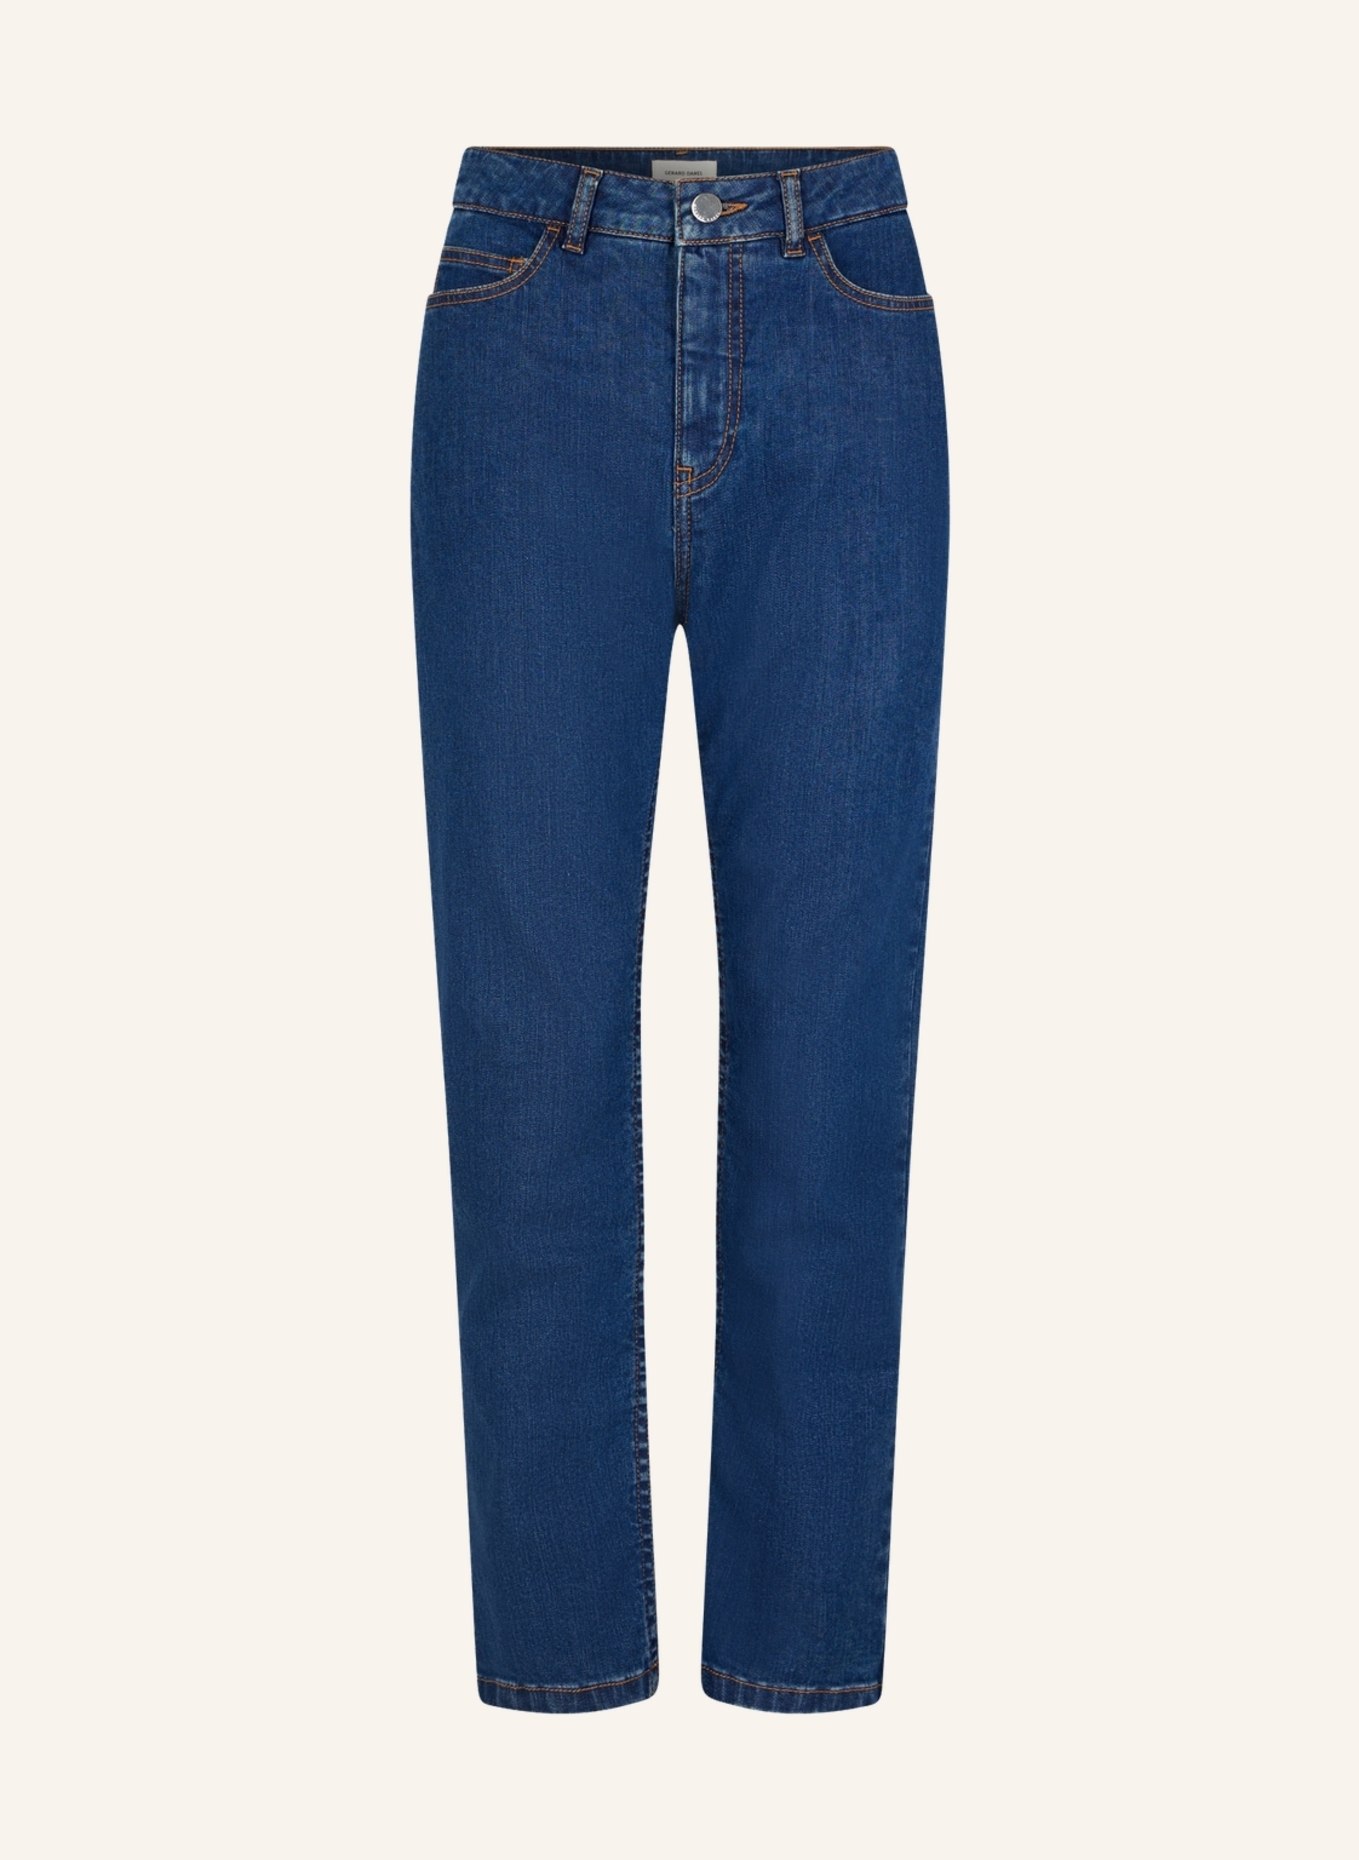 GERARD DAREL Jeans CHERYL, Farbe: BLAU (Bild 1)